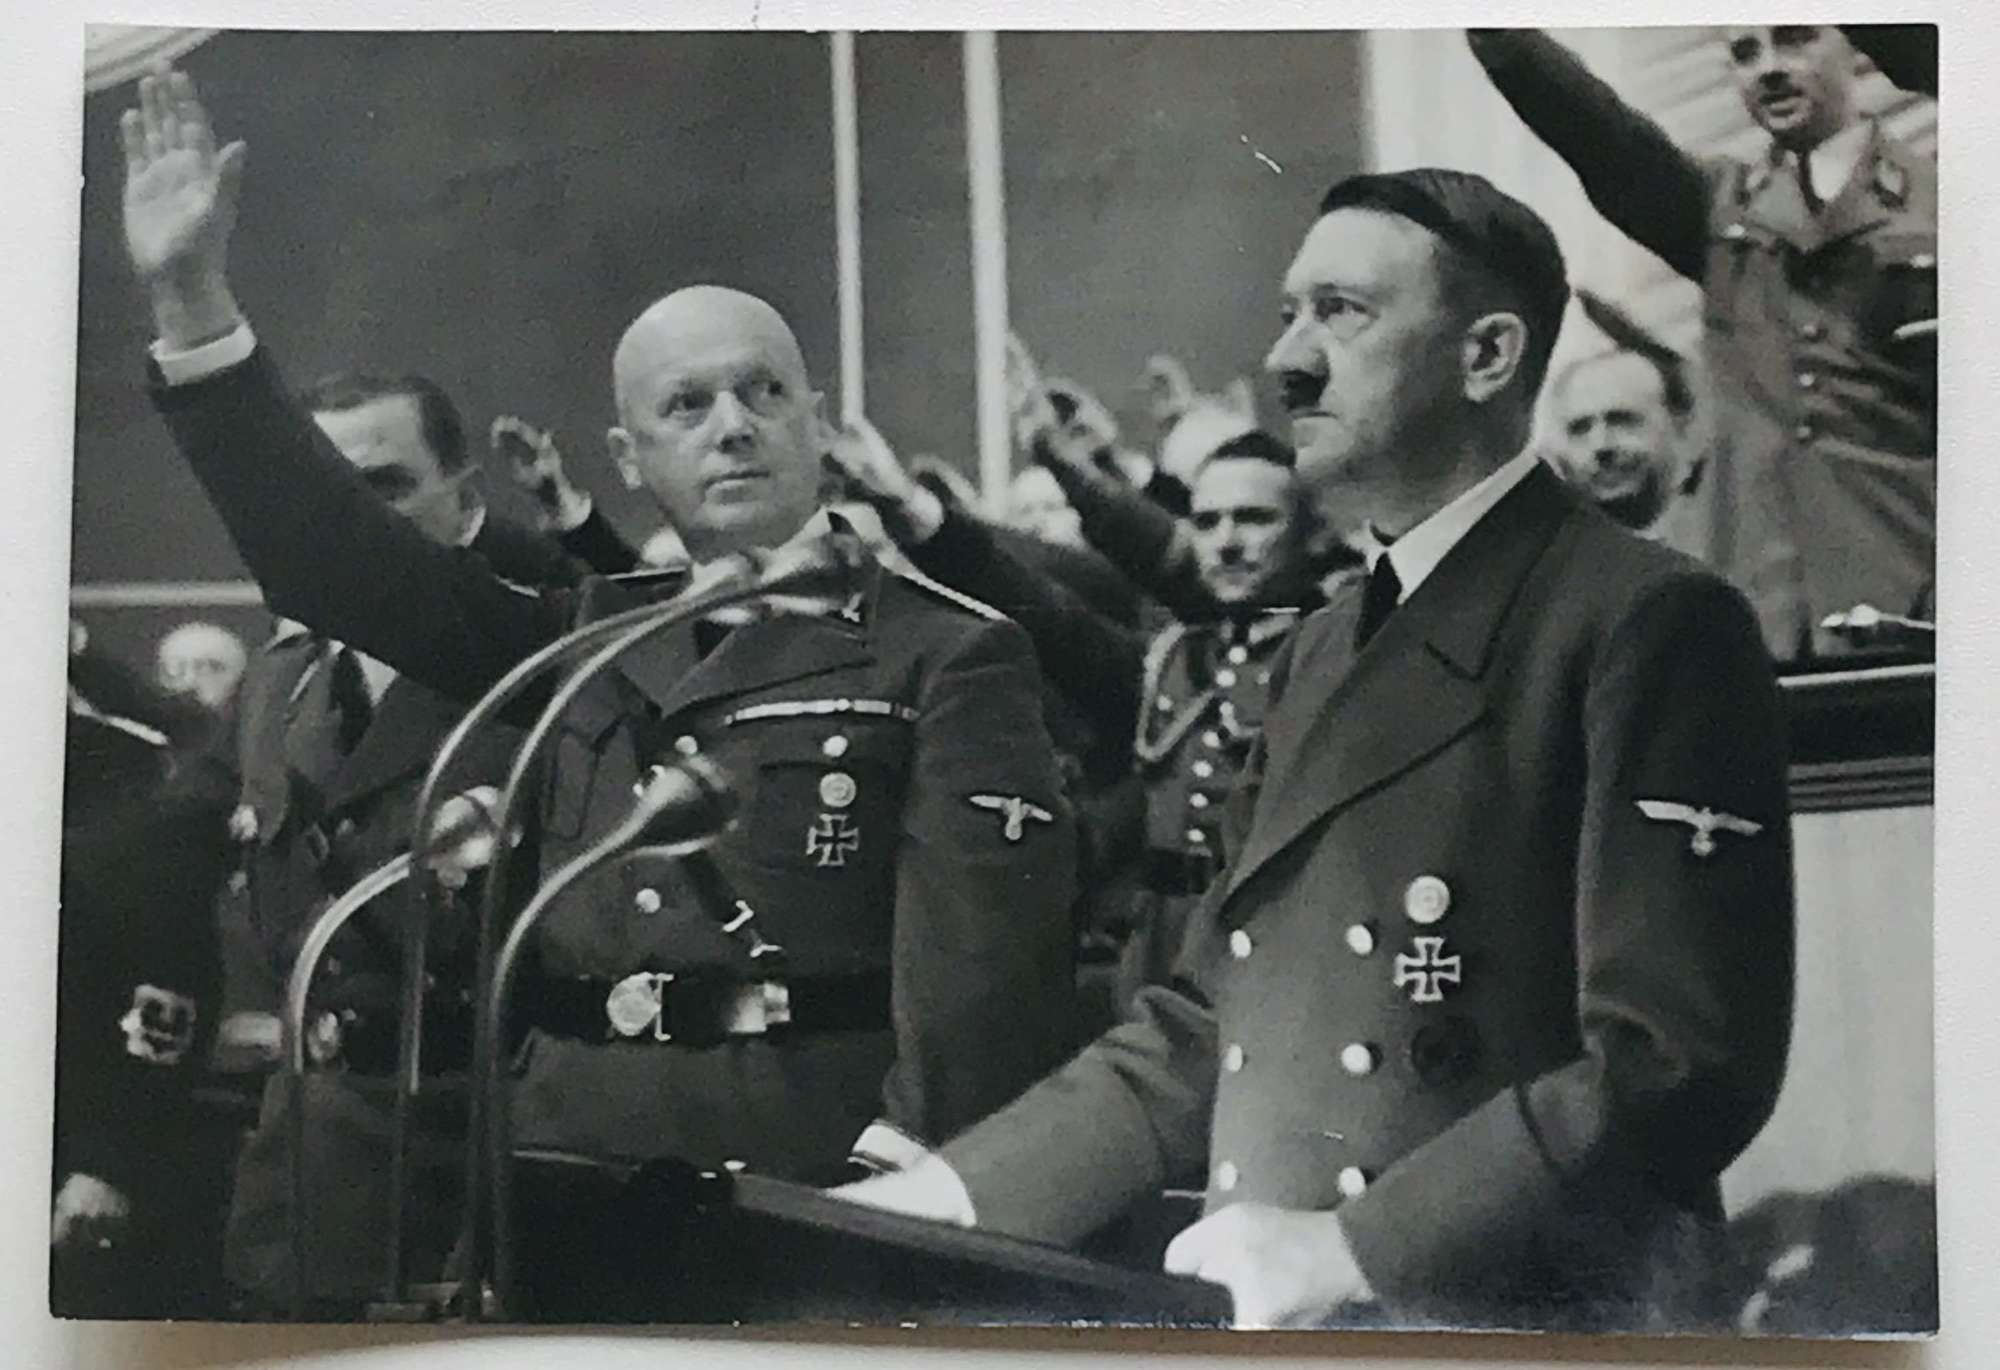 Press photo of Adolf Hitler